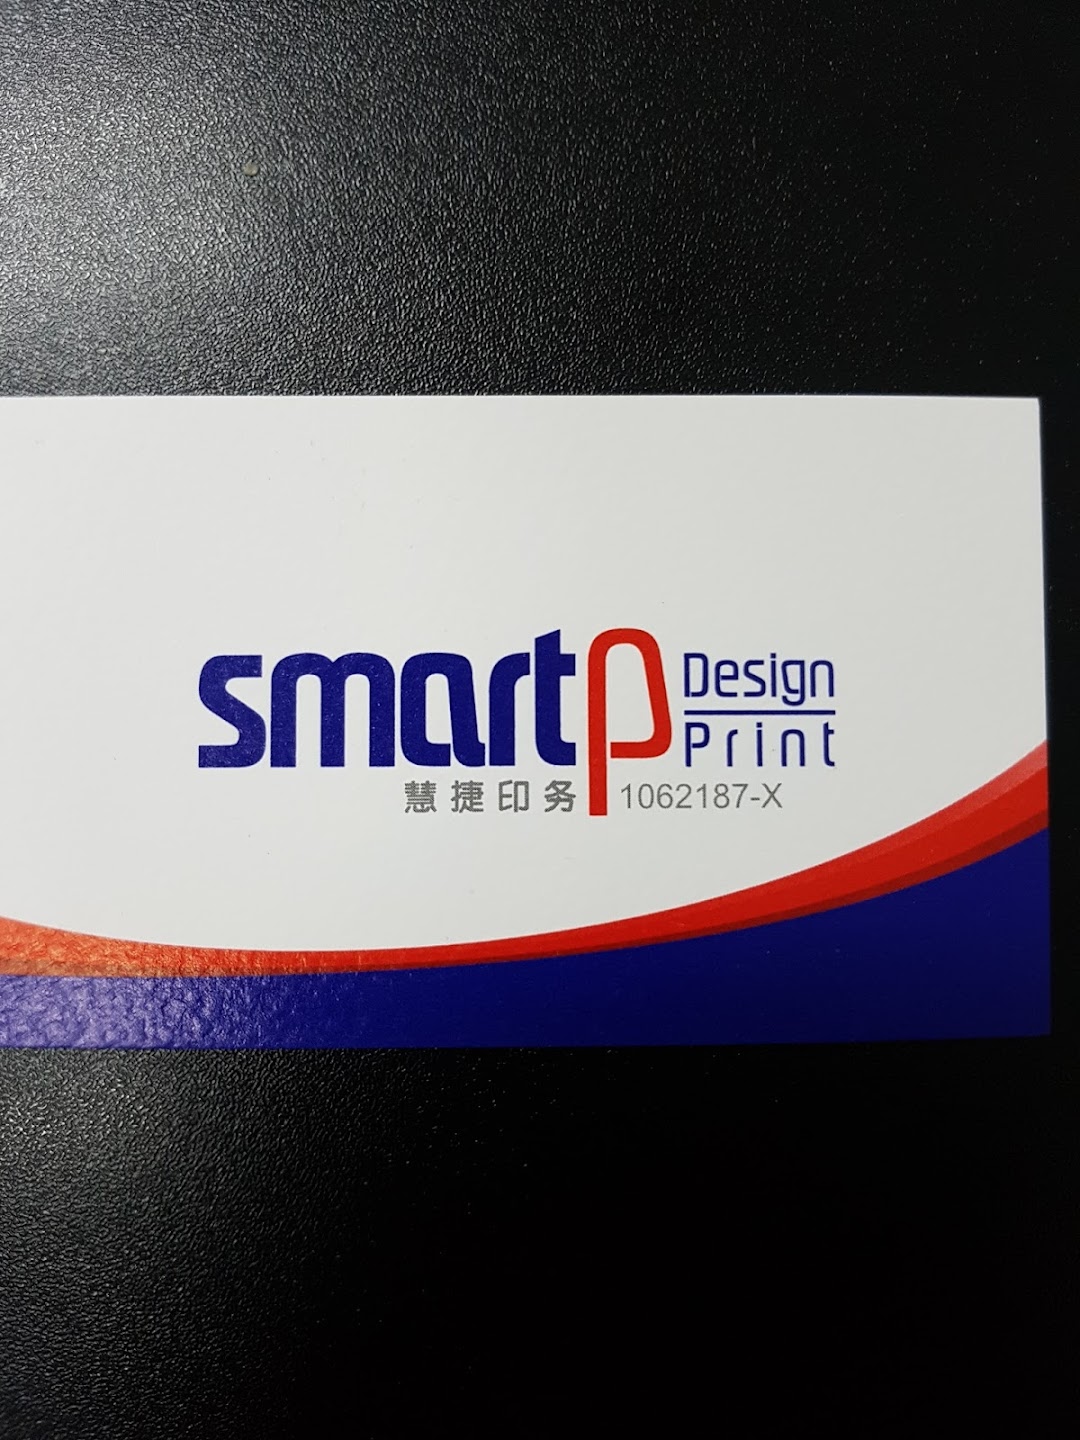 Smart P Design & Print Sdn Bhd.